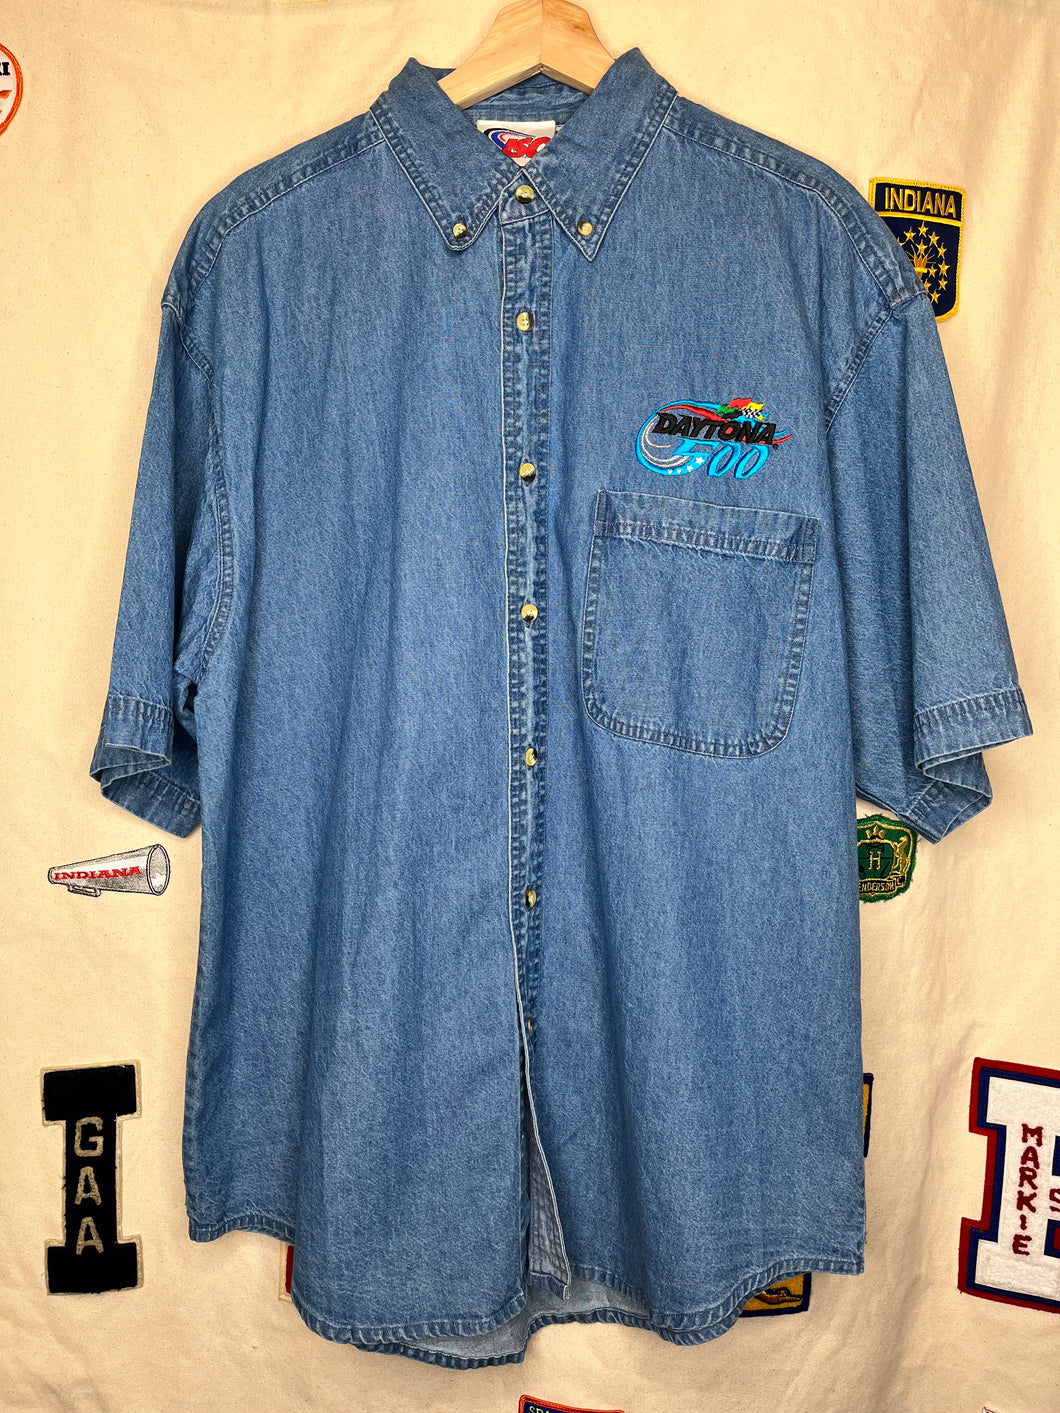 Vintage Daytona 500 Racing Denim Button Up Shirt: L/XL